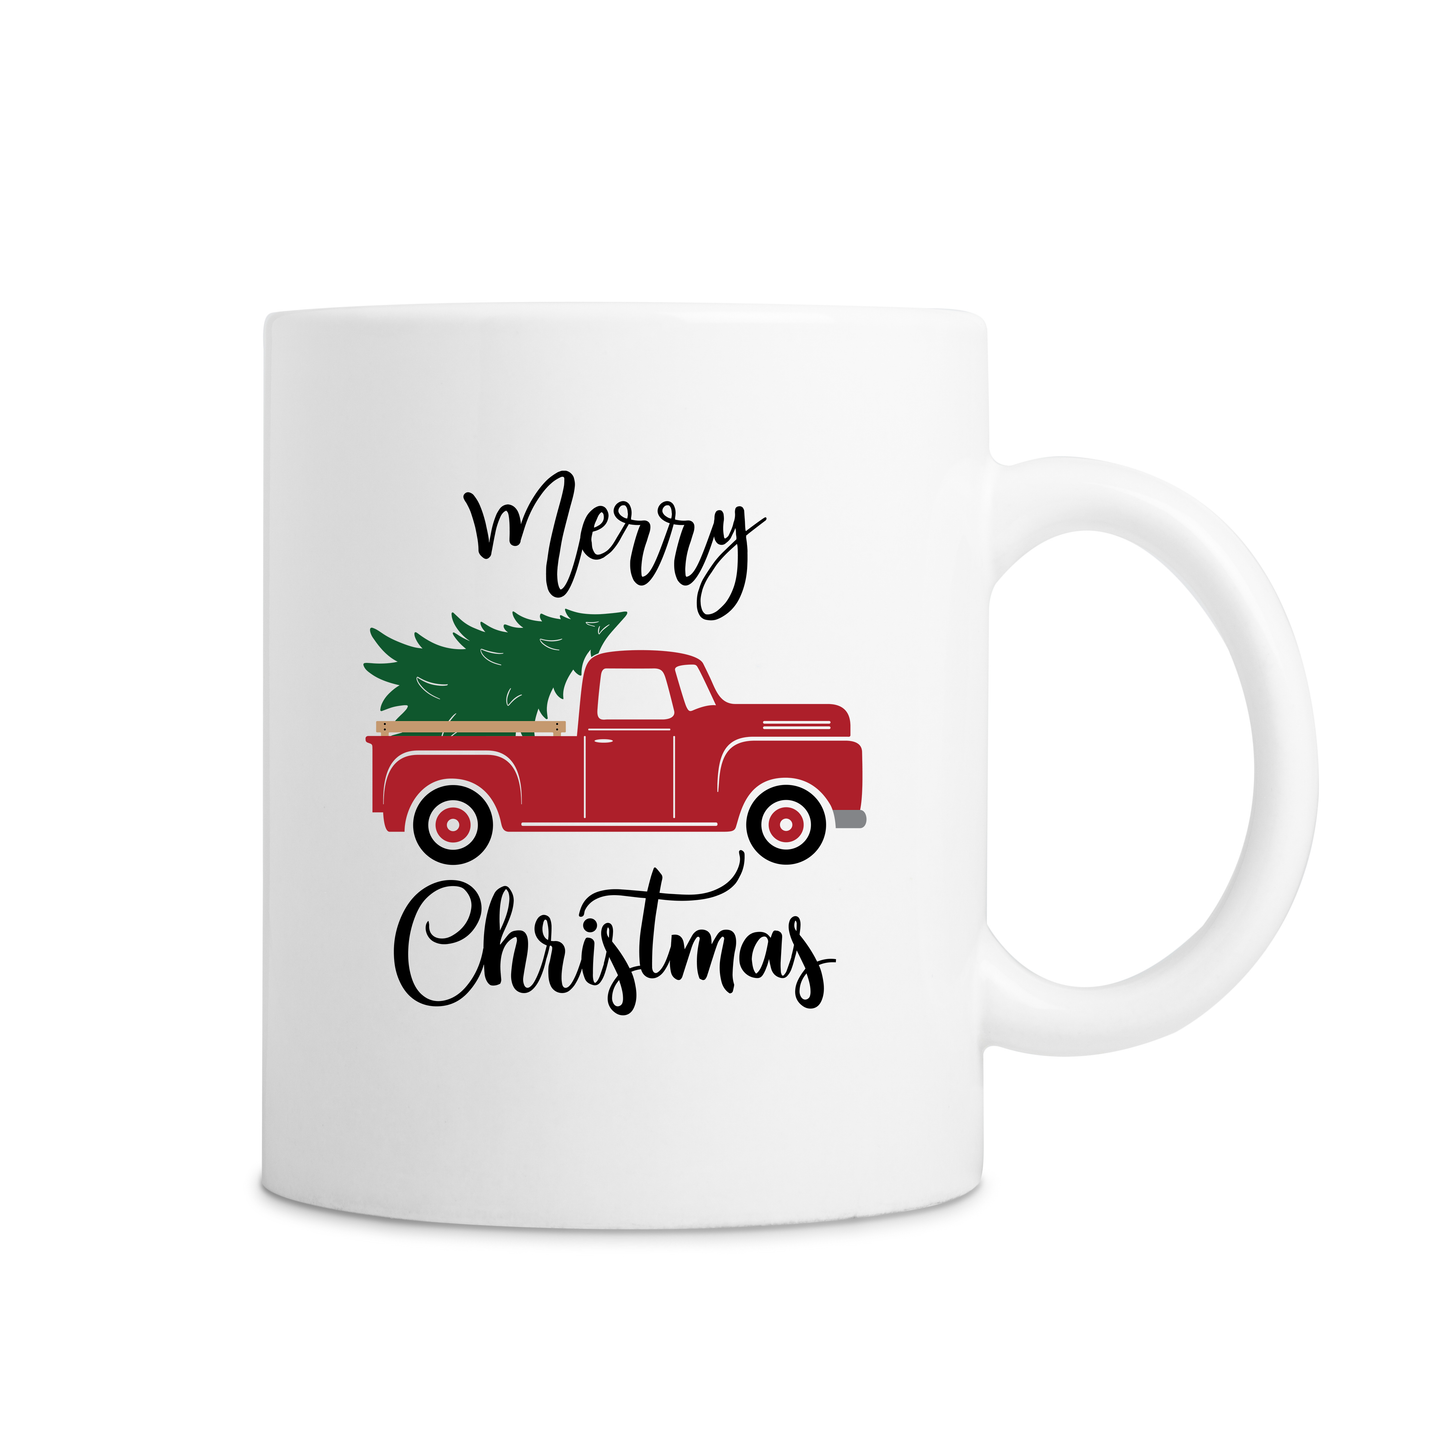 Merry Christmas Red Truck Mug - White